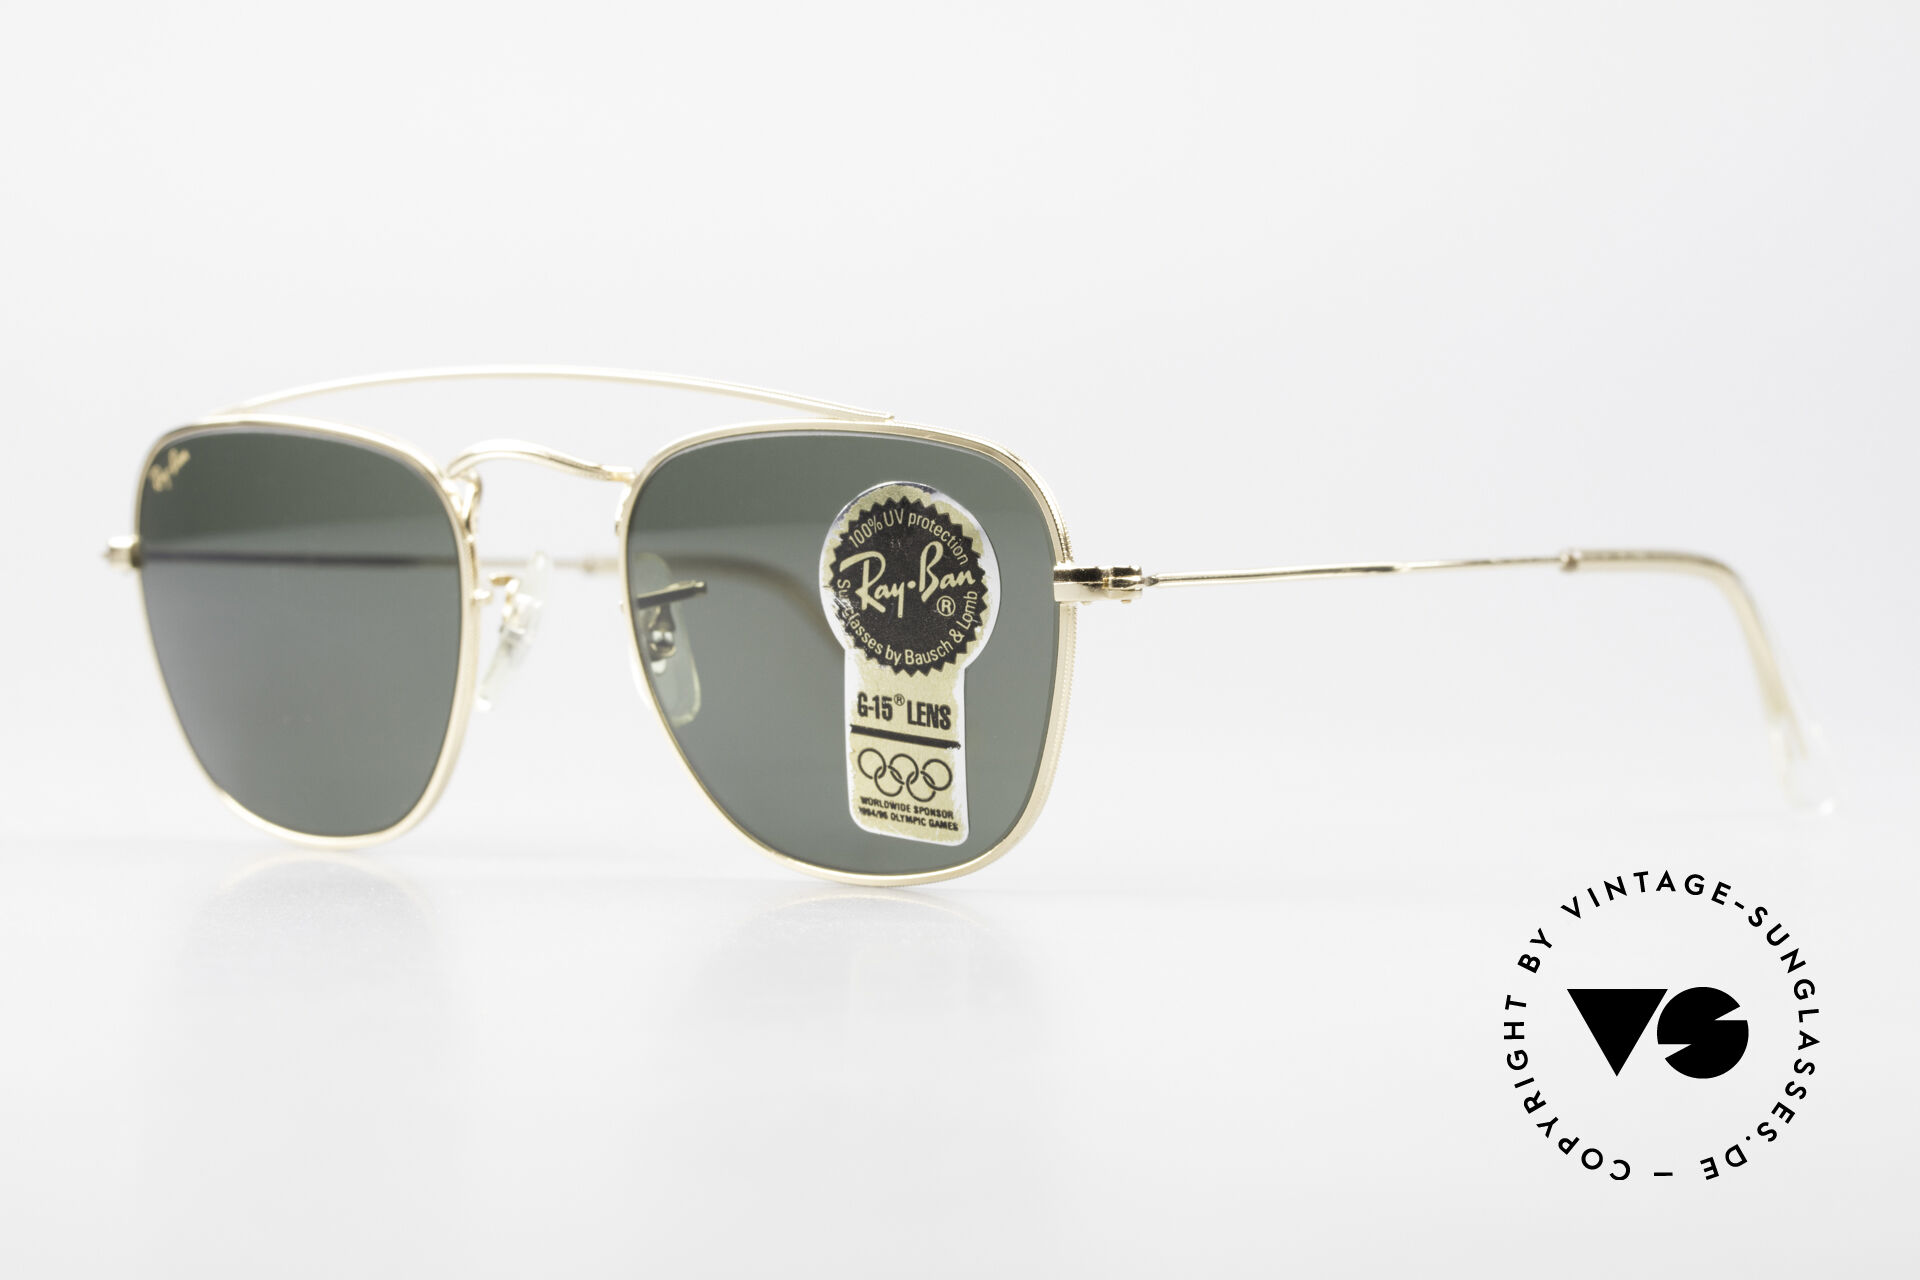 Sunglasses Ray Ban Classic Style V Brace Bausch & Lomb Sunglasses USA